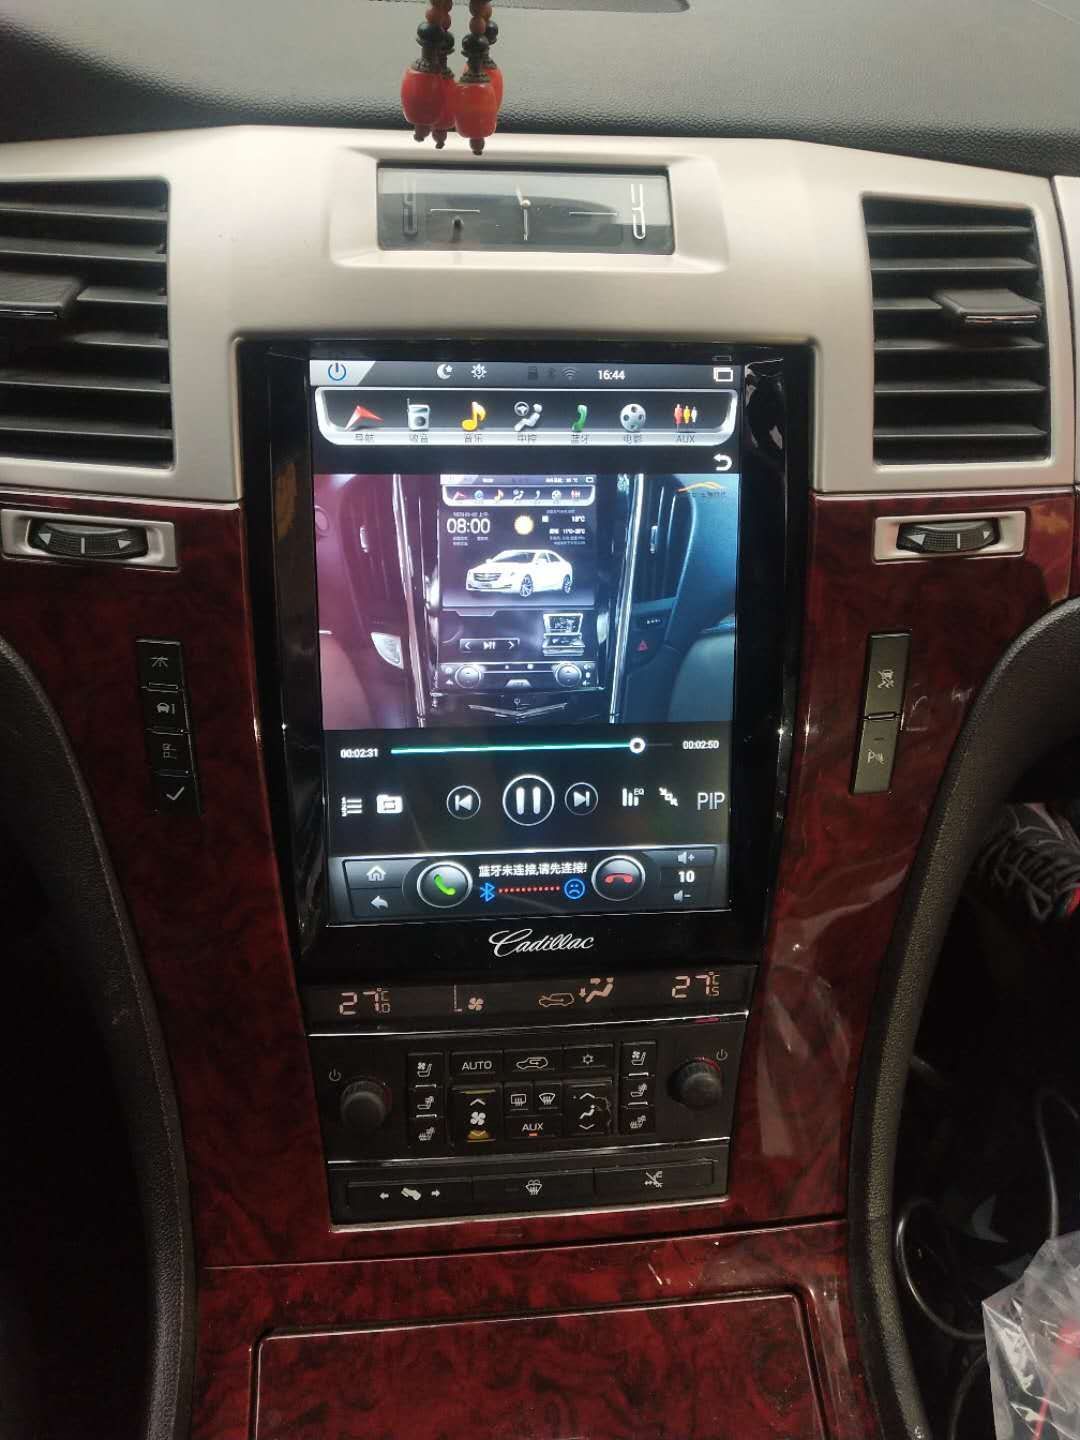 [Open-box] 10.4" Vertical Screen Android Navigation Radio for Cadillac Escalade 2007 - 2014